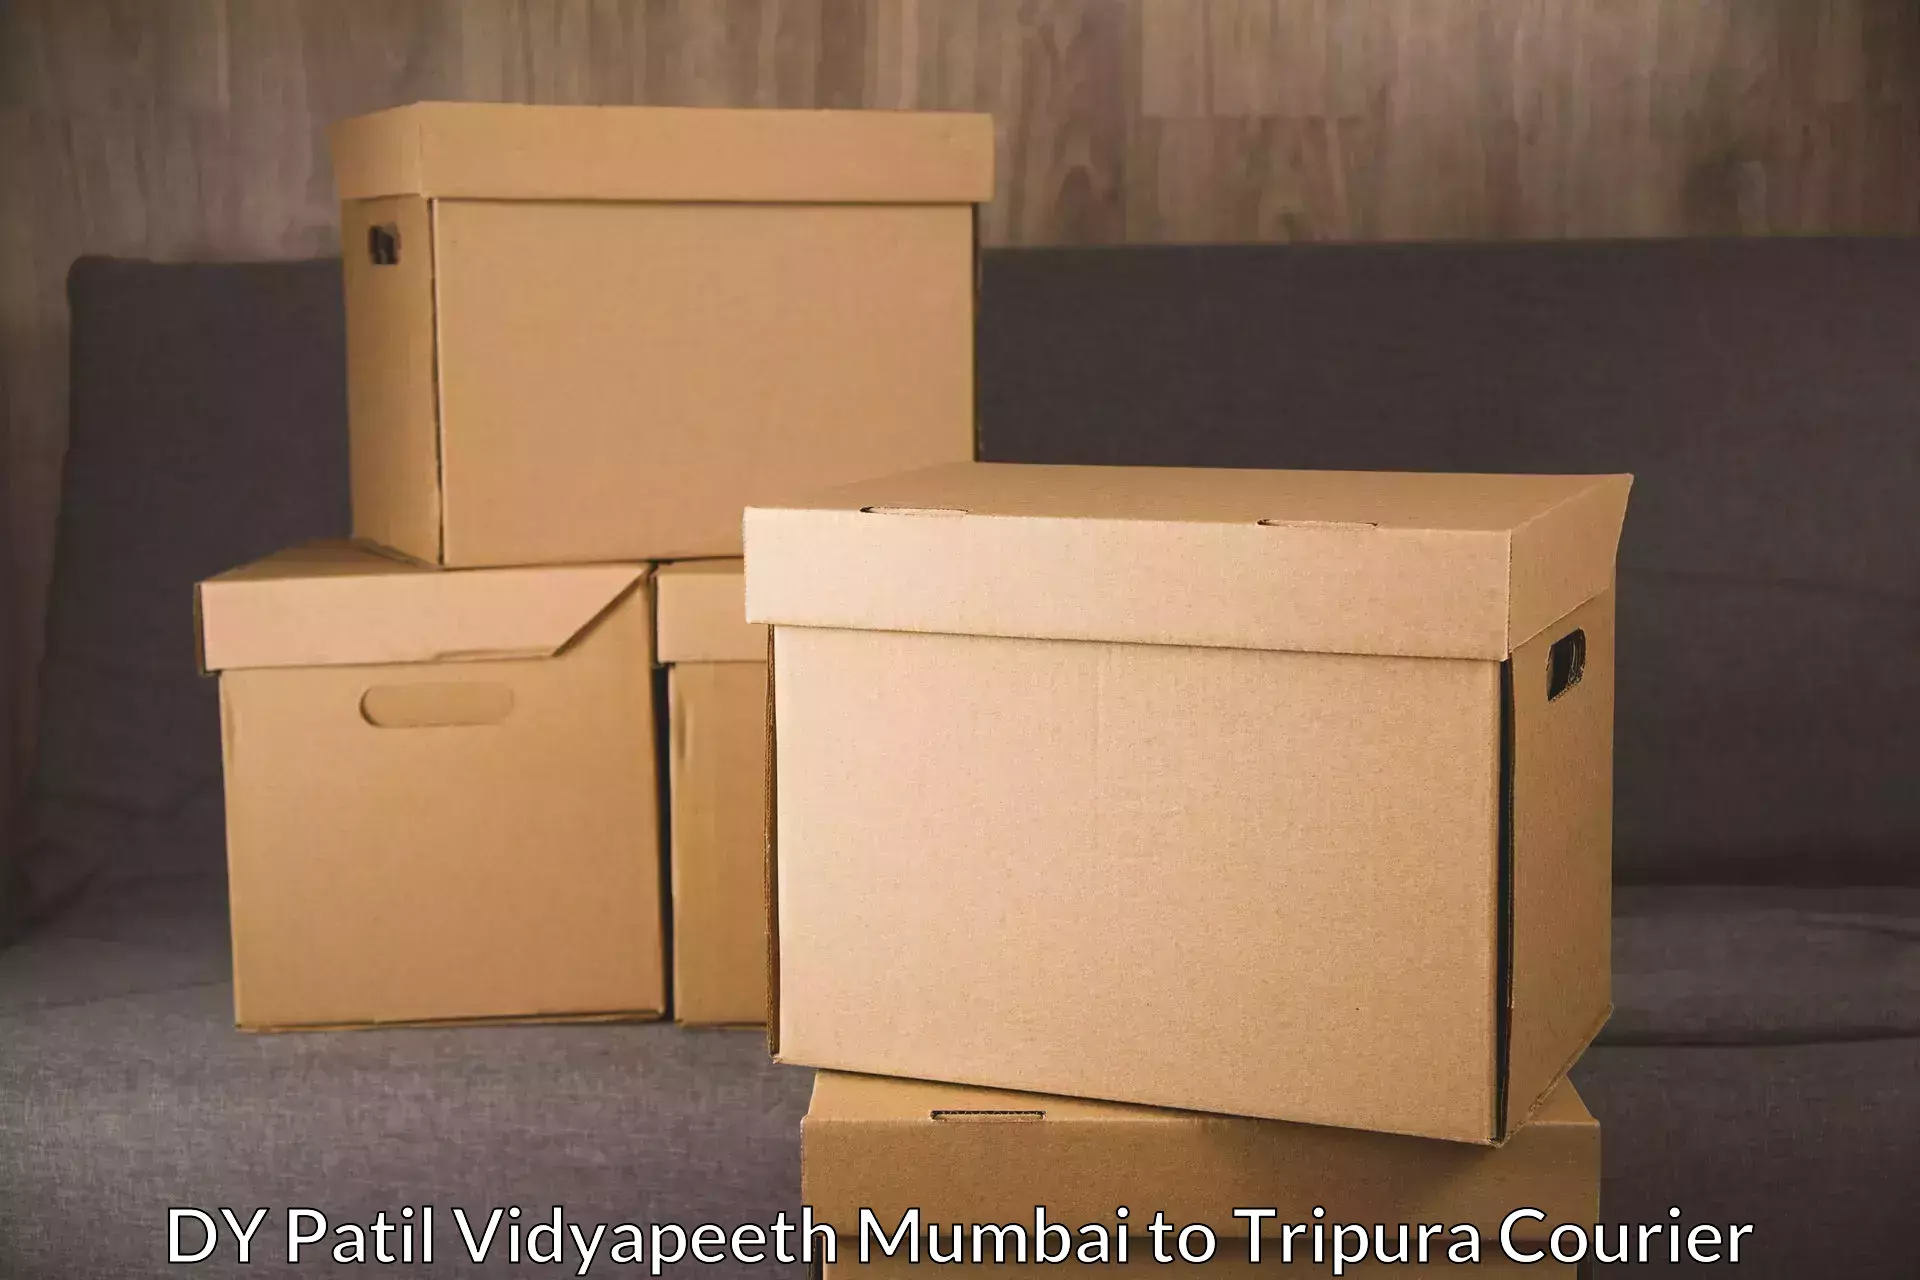 Efficient order fulfillment DY Patil Vidyapeeth Mumbai to Agartala